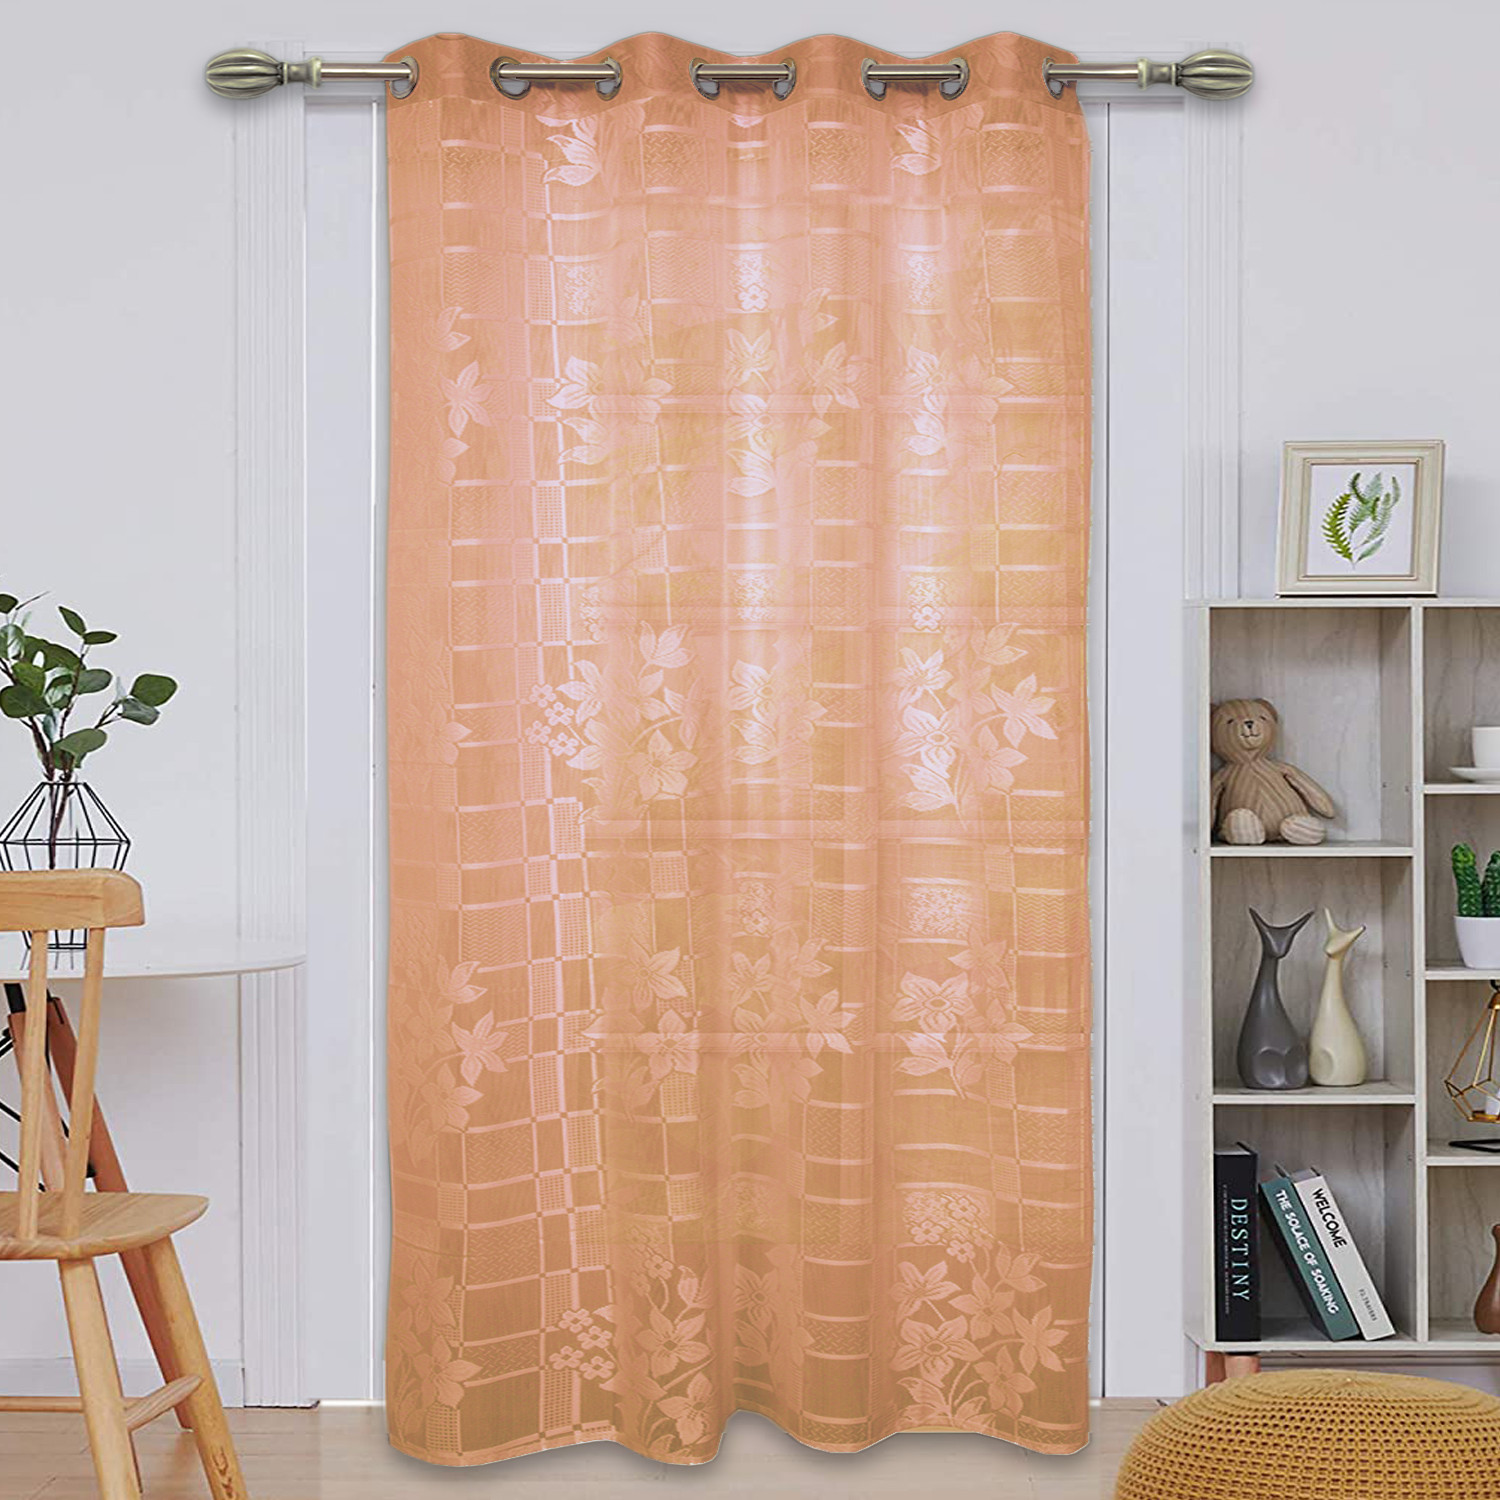 Kuber Industries Flower Print Home Decor Cotton Door Curtain With 8 Eyeletss, 7 Feet (Brown)